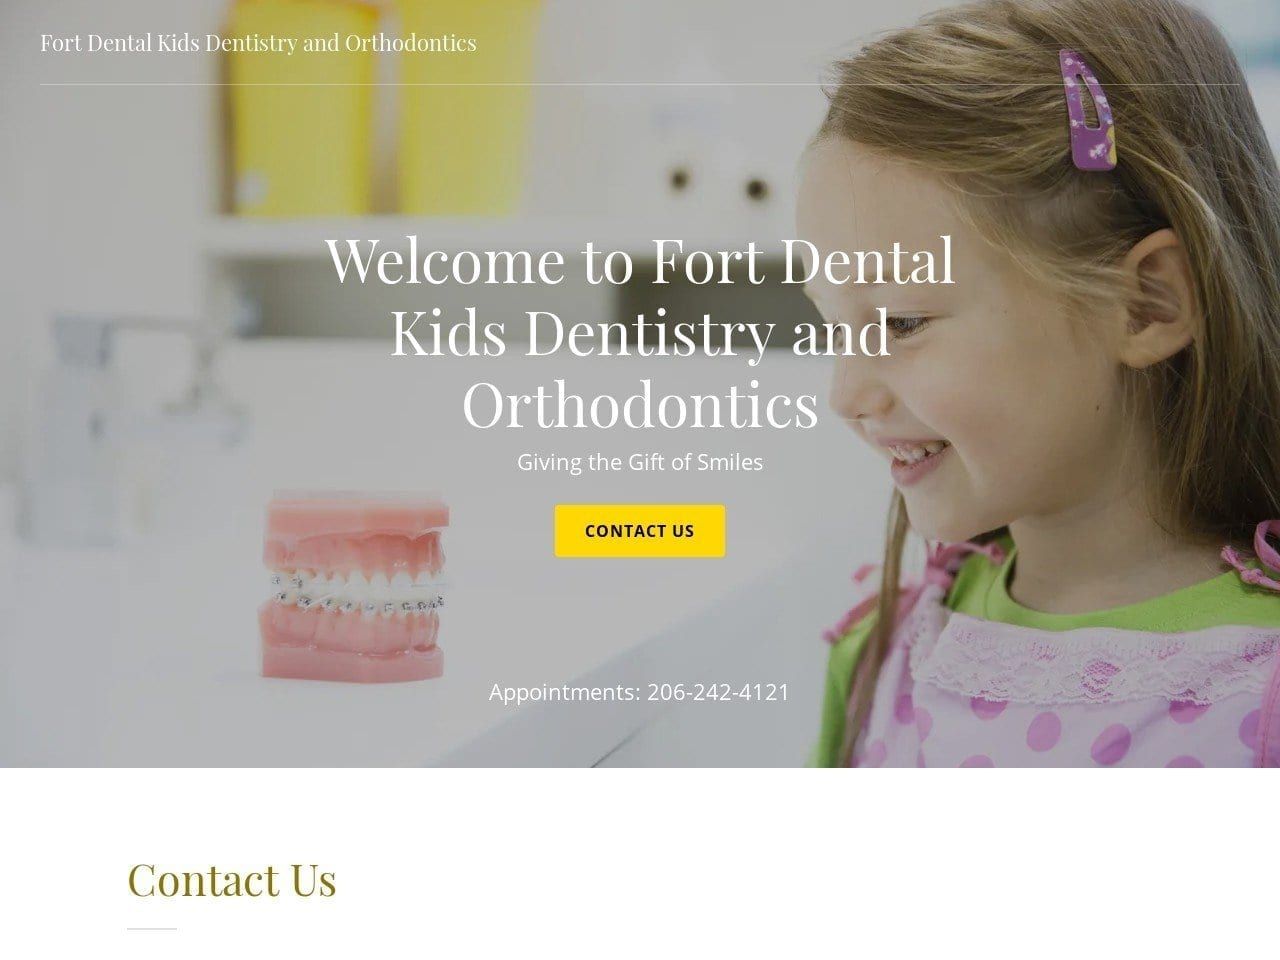 Fort Dental Kids Dentist Website Screenshot from fortdental.net